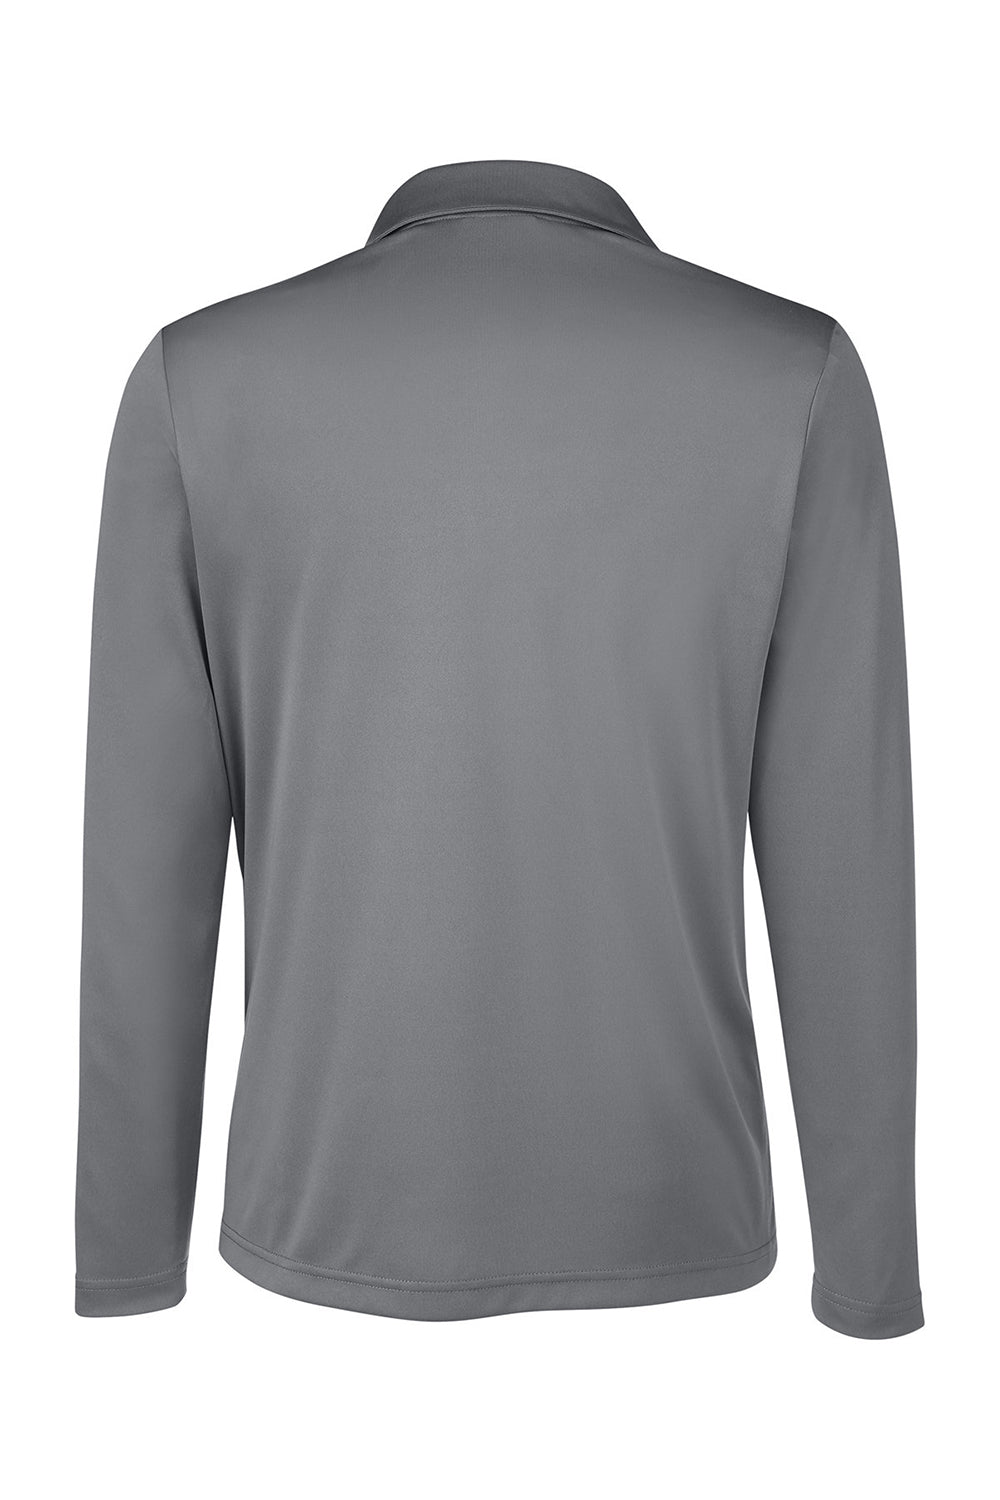 Team 365 TT51LW Womens Zone Sonic Moisture Wicking Long Sleeve Polo Shirt Graphite Grey Flat Back